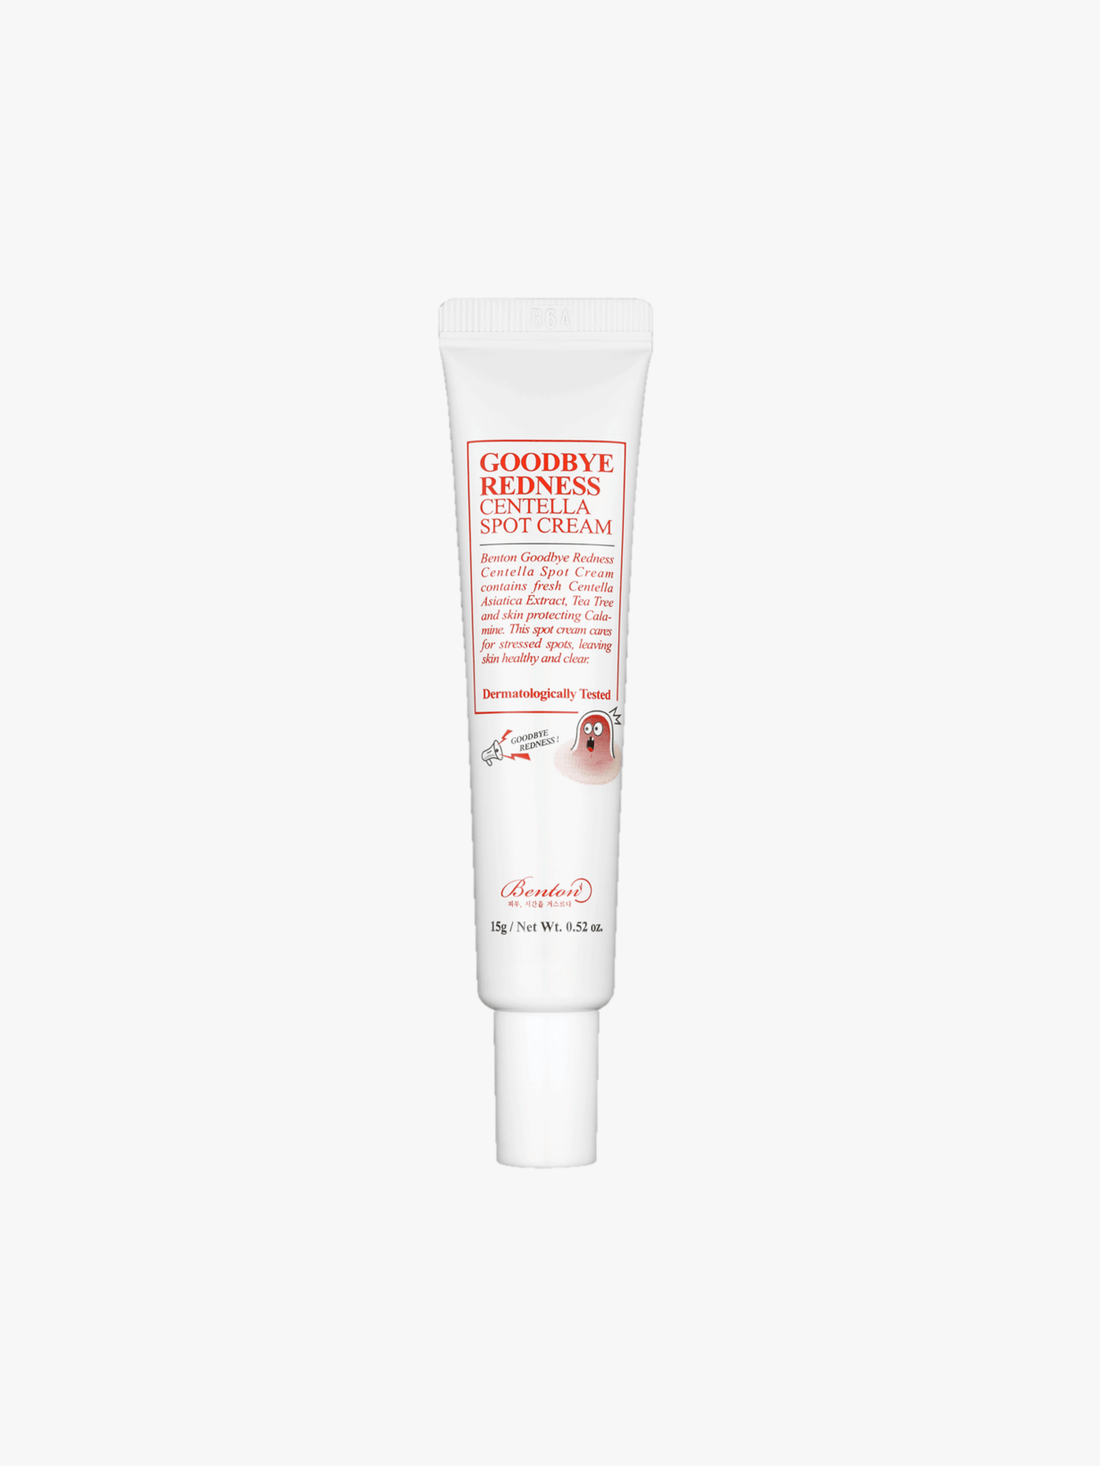 Benton - Crème - Goodbye redness centella spot cream